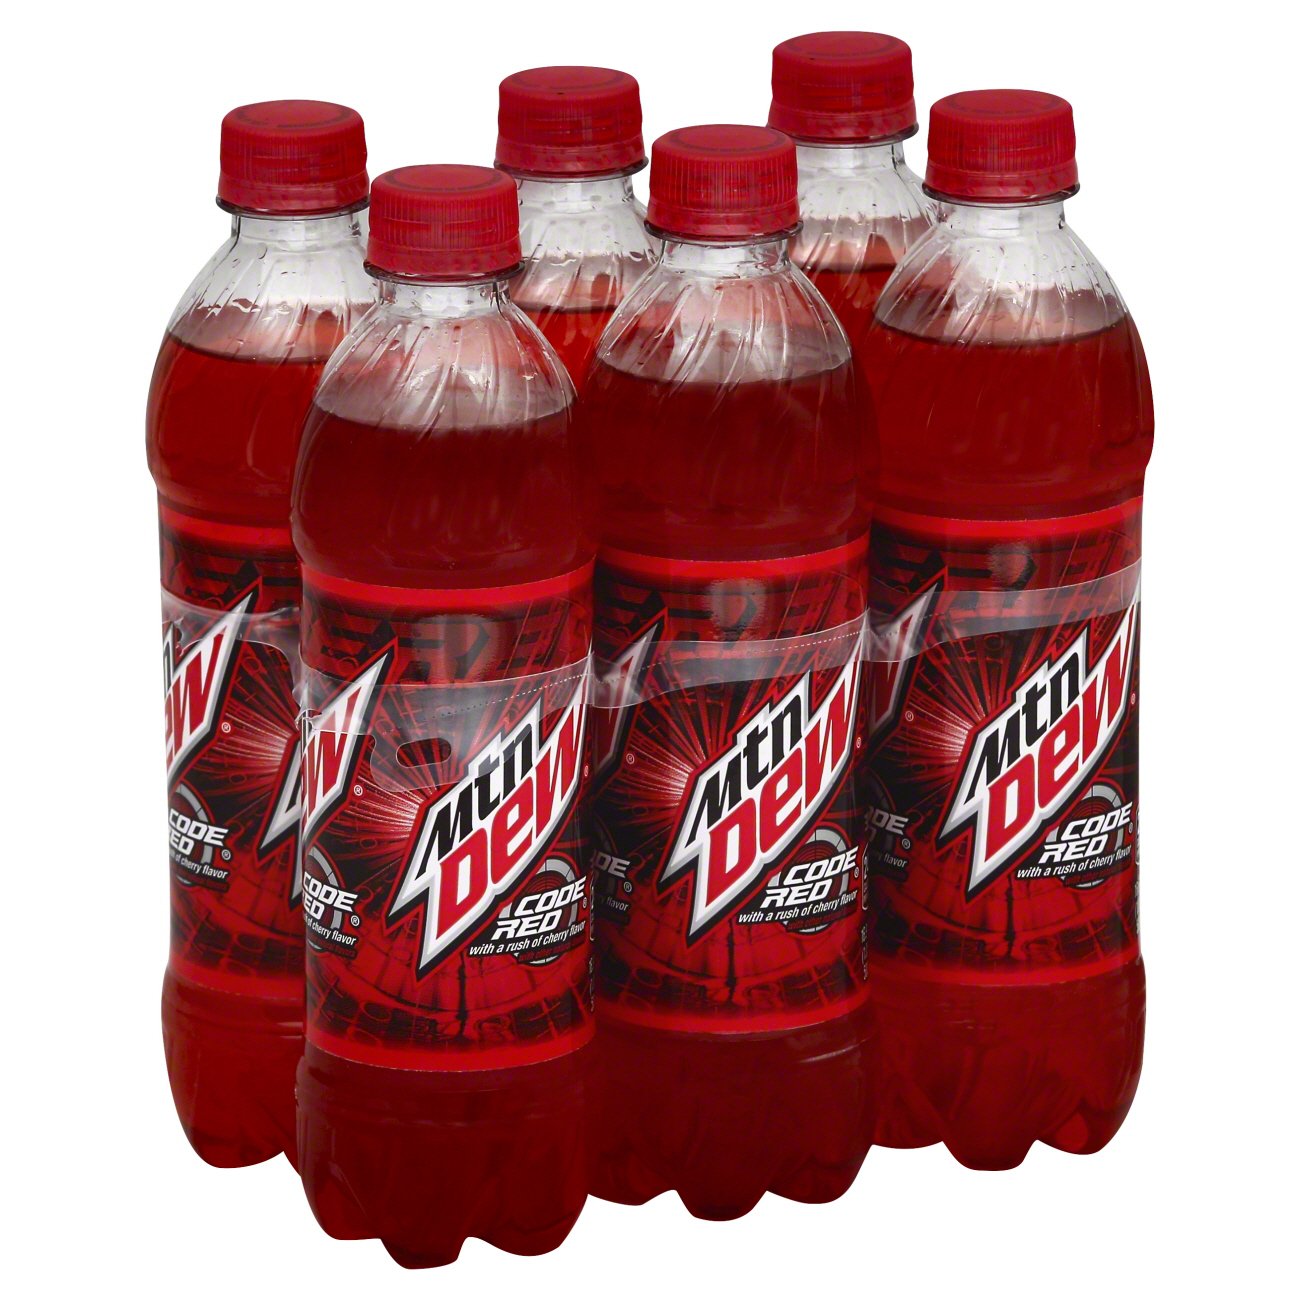 Mountain Dew Code Red Cherry Soda L Bottles Shop Soda At H E B